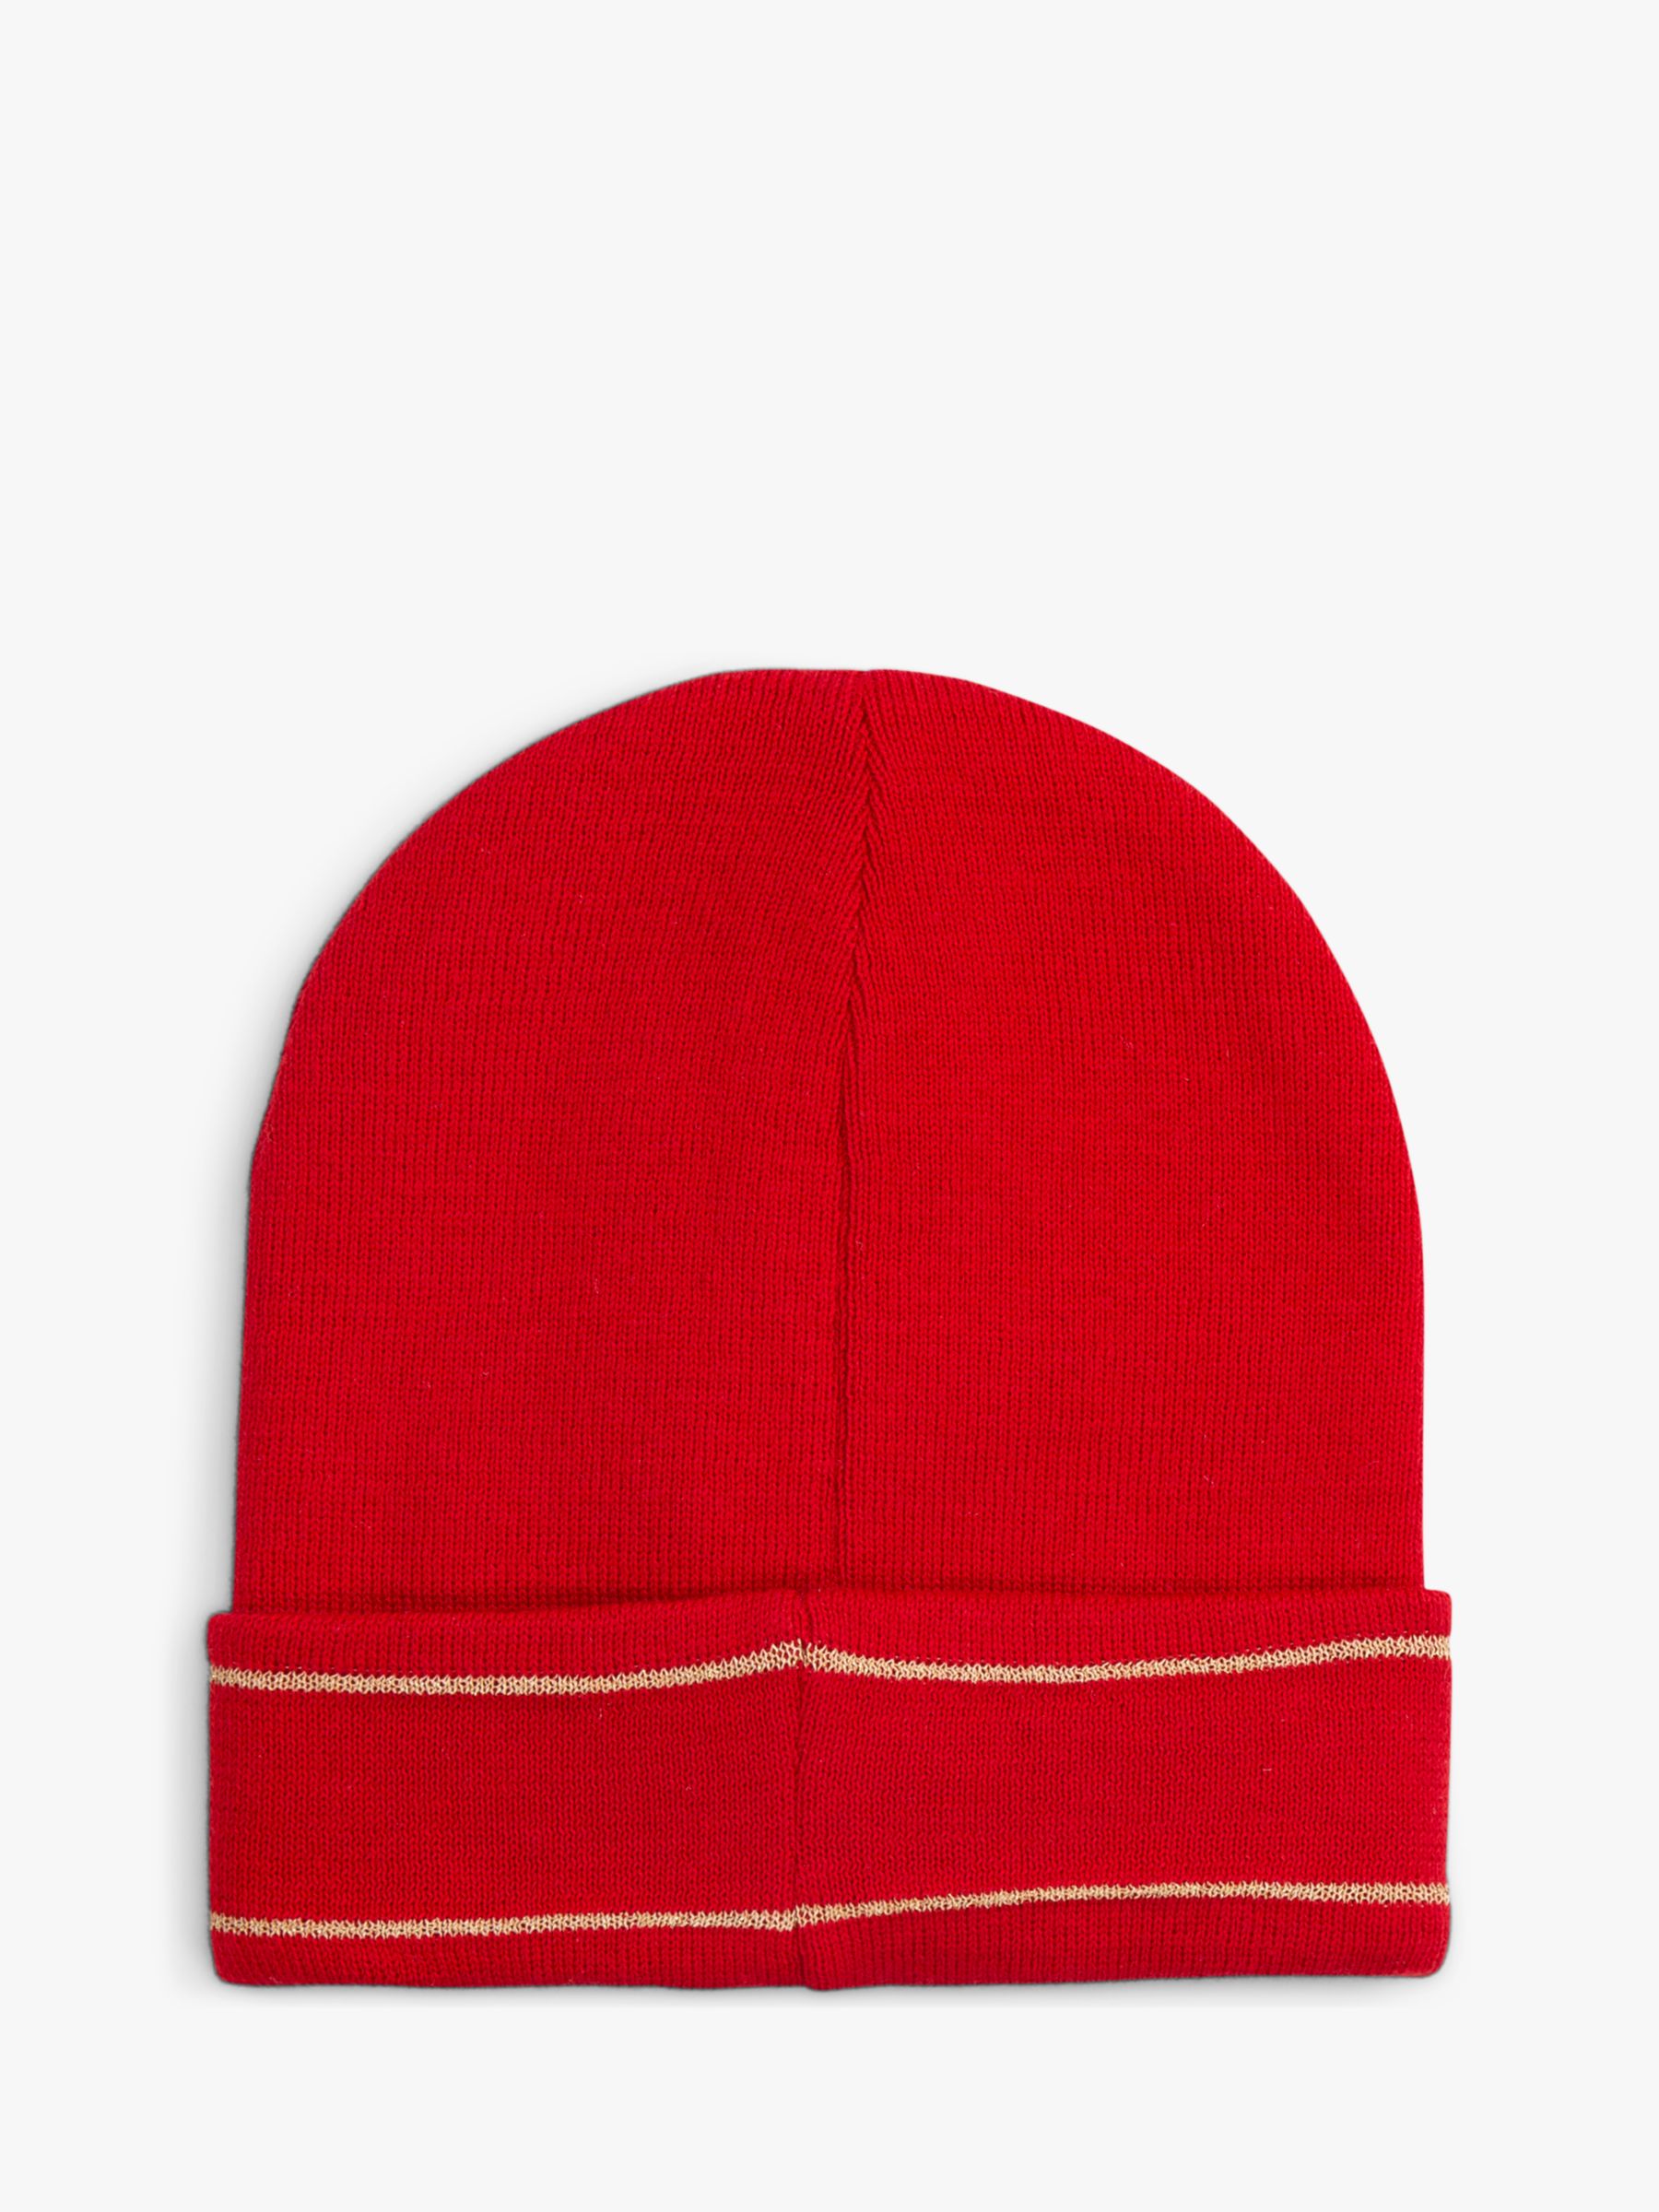 Michael Kors Kids' Logo Turn Up Beanie Hat, Bright Red, 8-12 years